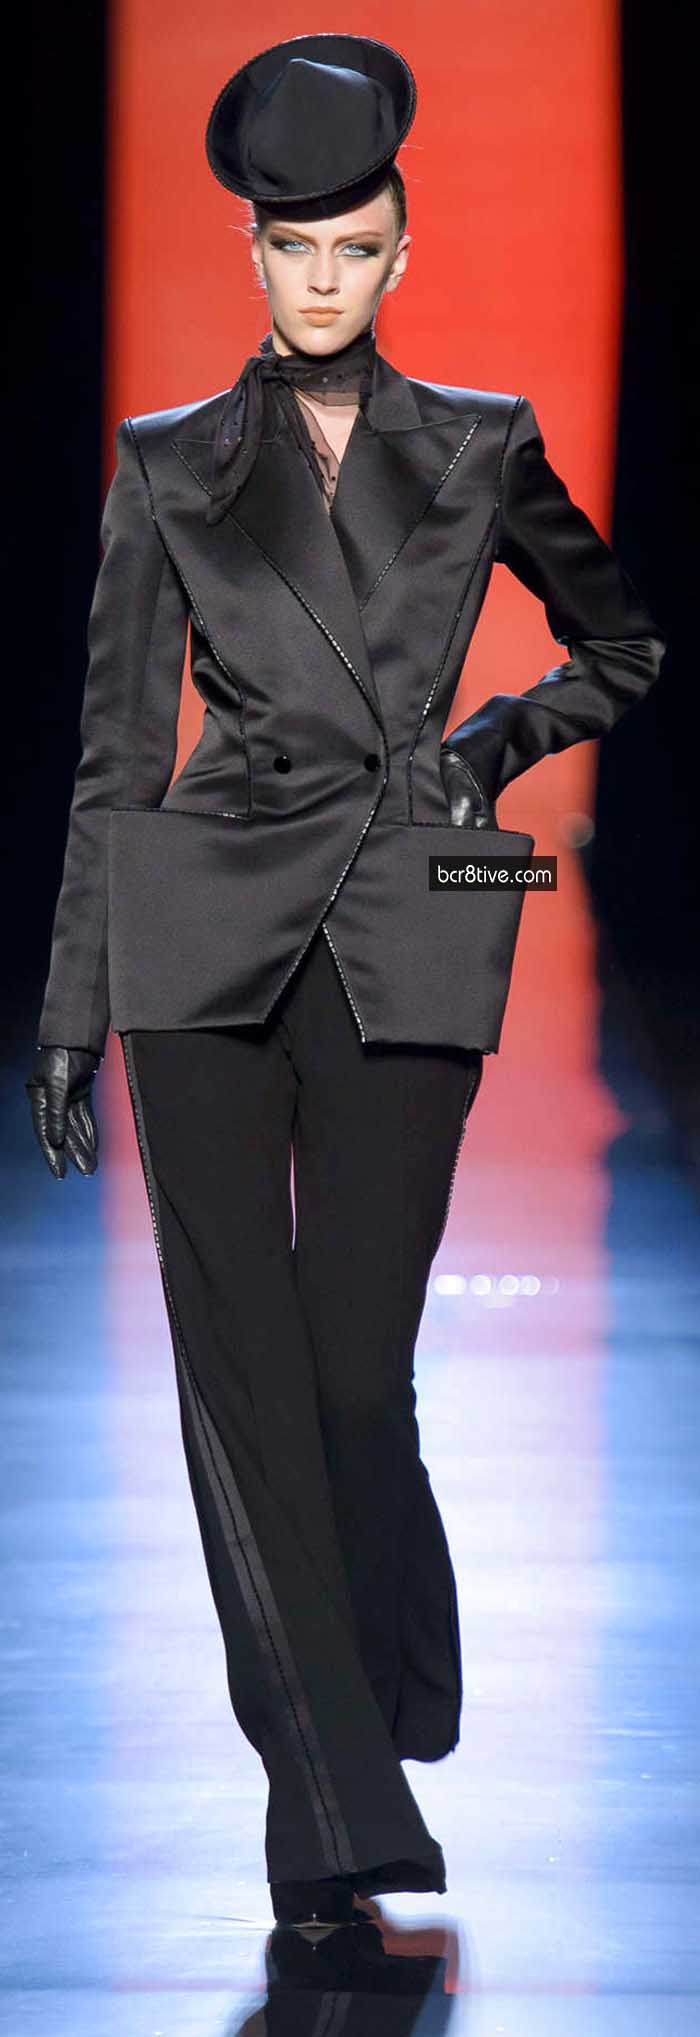 Jean Paul Gaultier Fall Winter 2013-14 Haute Couture